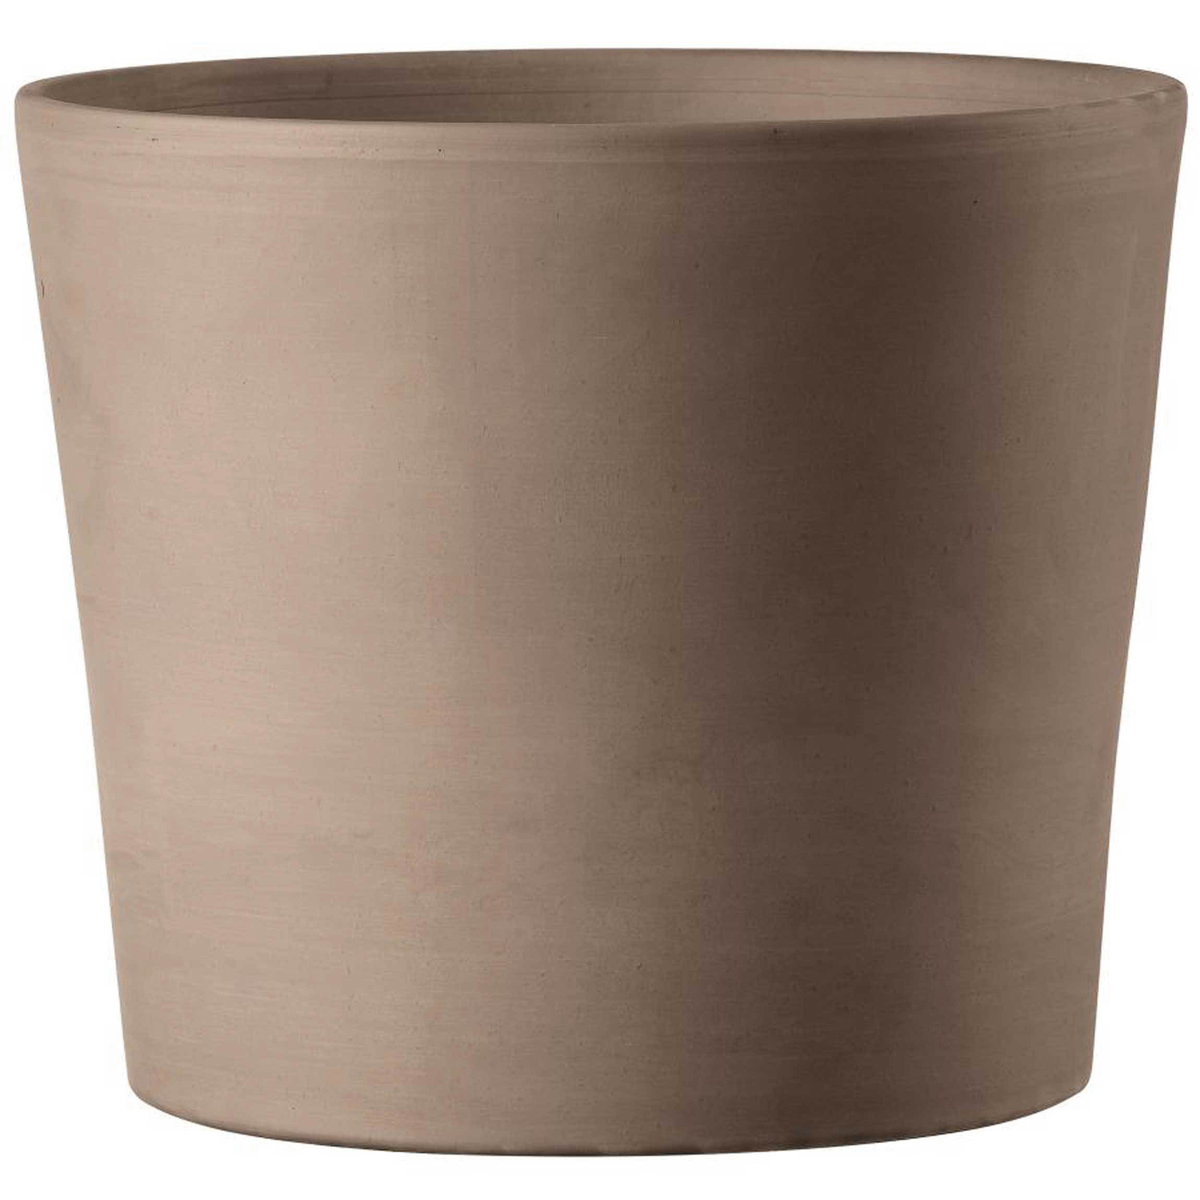 Vaso Cilindrico Clay Pot with Drainage in 10 inch Diameter